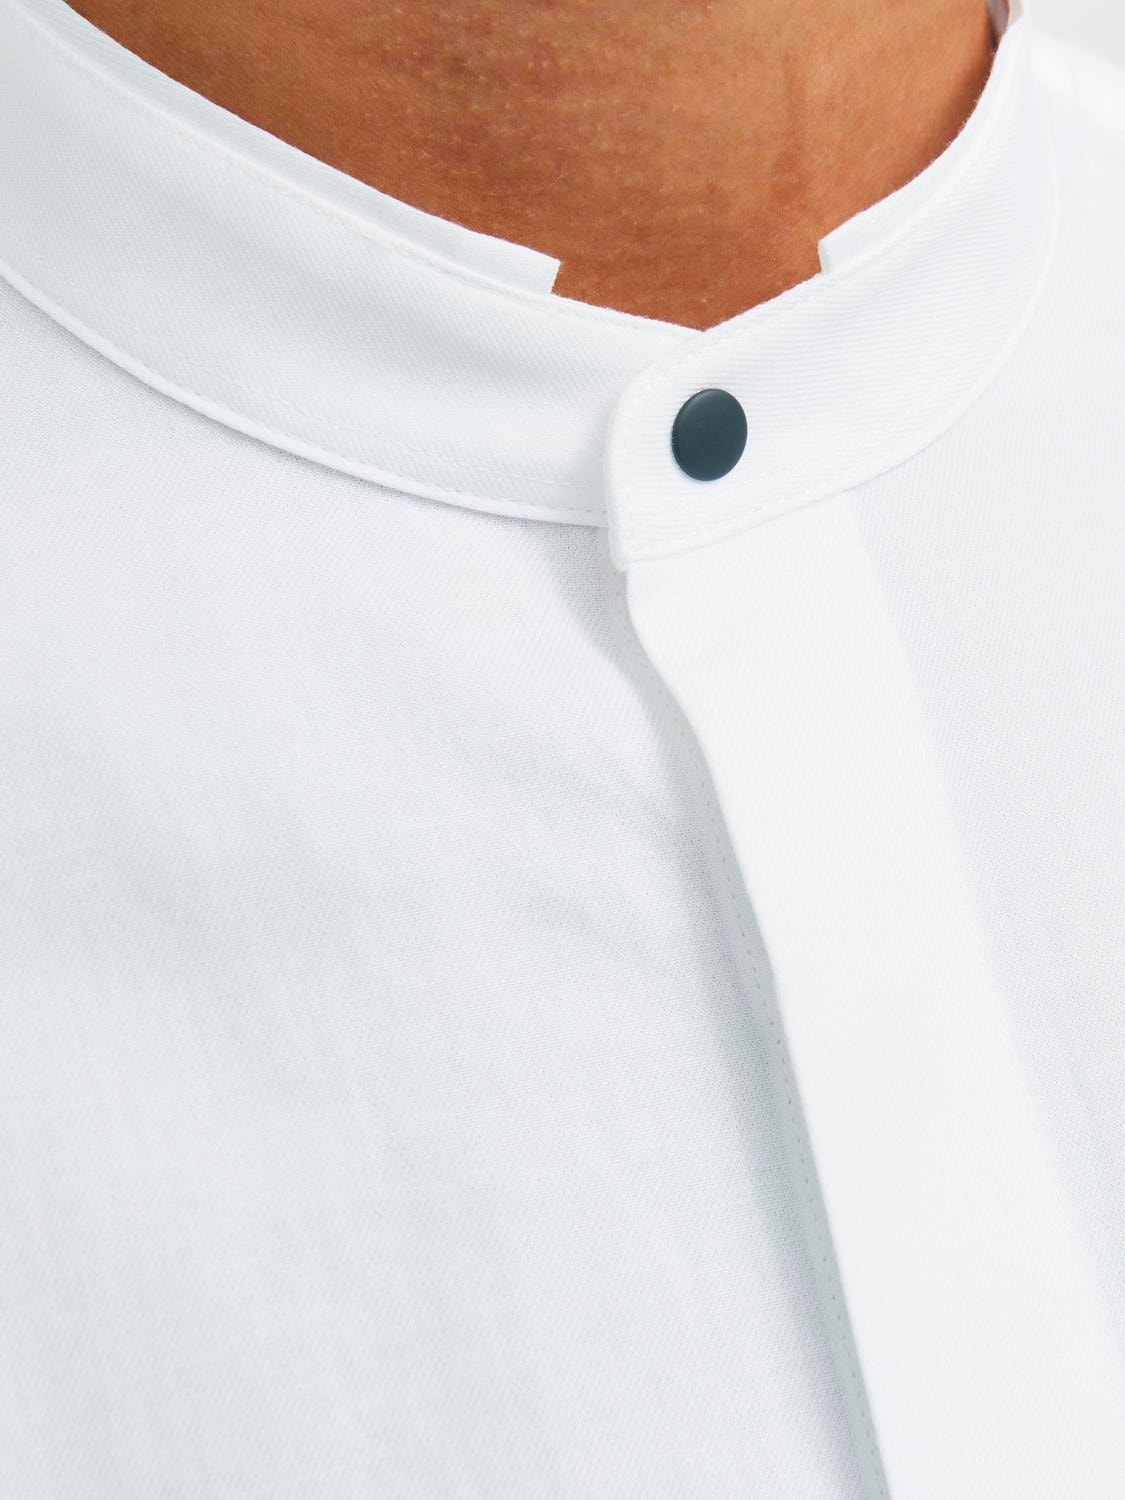 Jack & Jones Slim Fit Shirt -White - 12245614